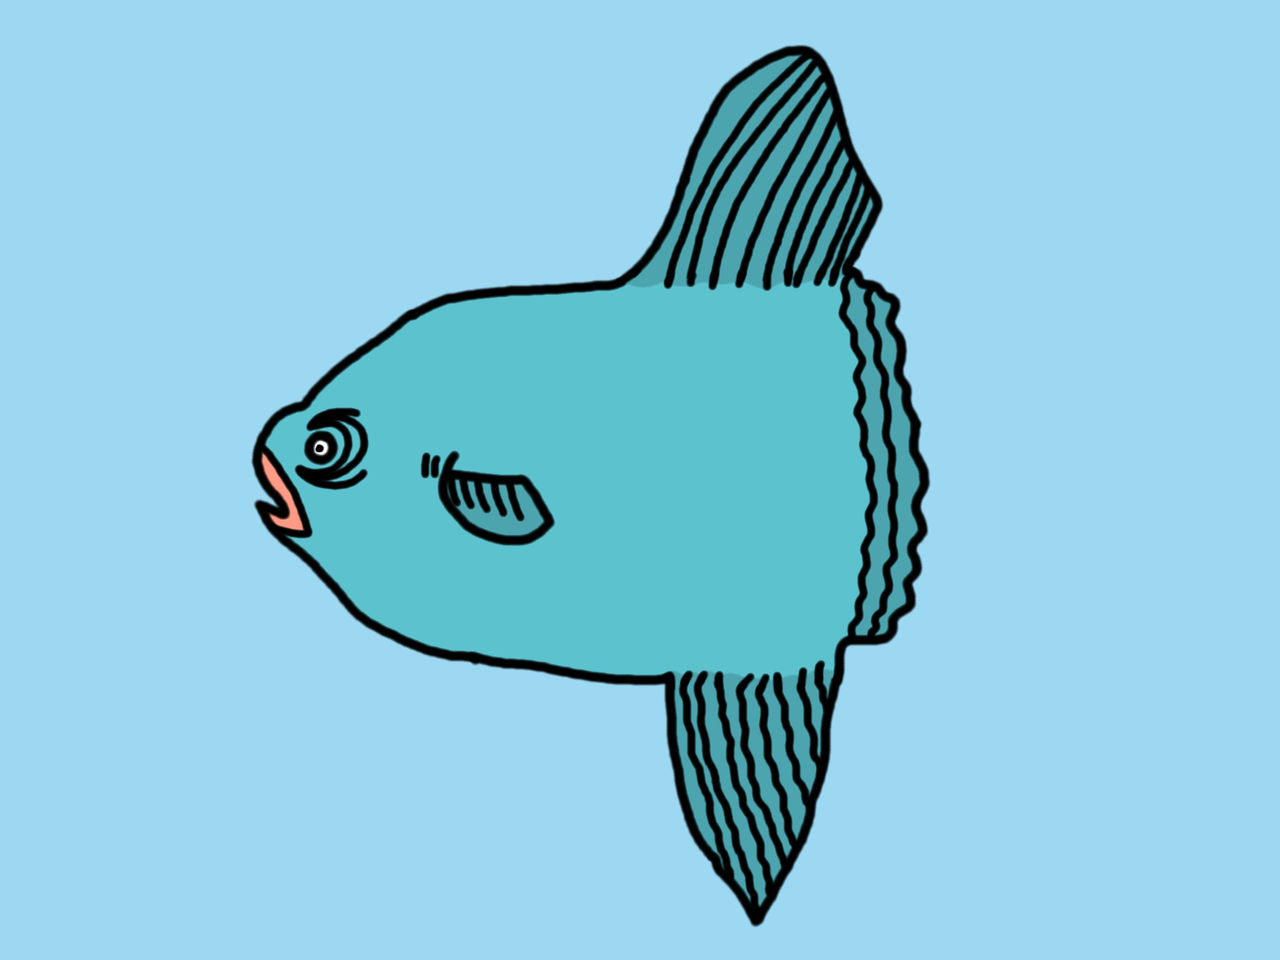 Ocean Sunfish by IAmAutism on DeviantArt